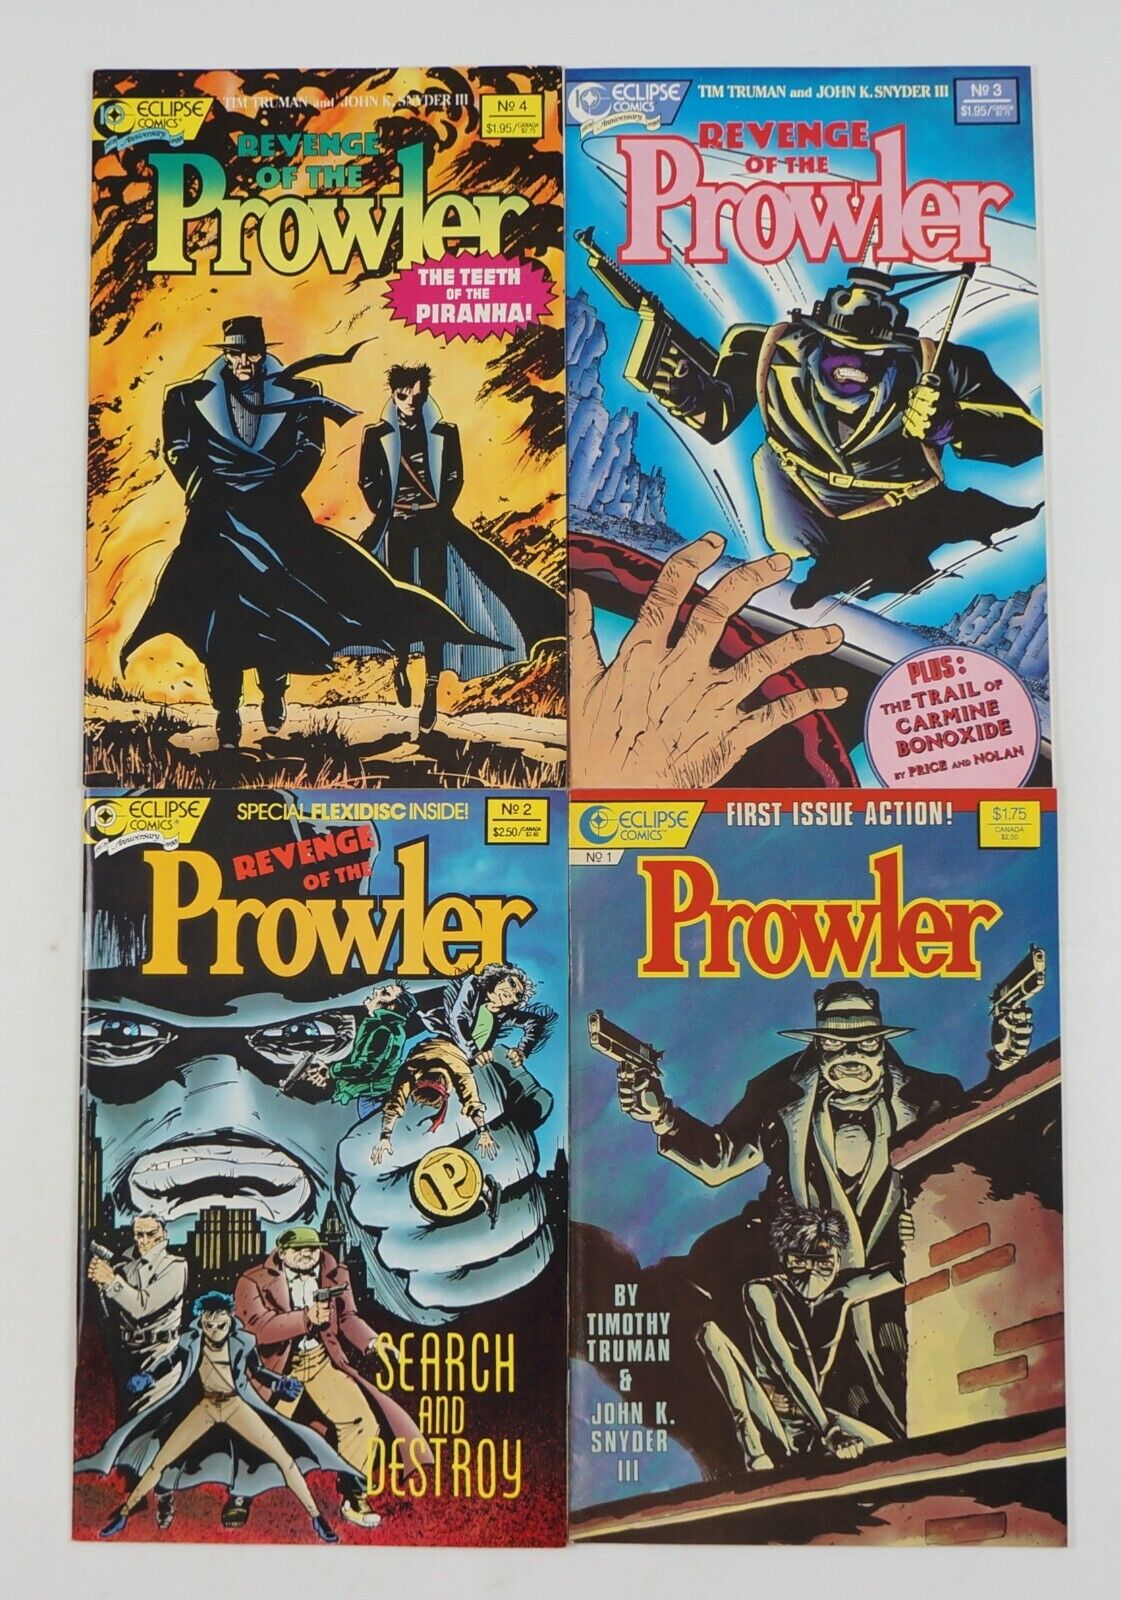 Prowler #1-4 VF/NM complete series - Eclipse Comics - Tim Truman John Snyder set